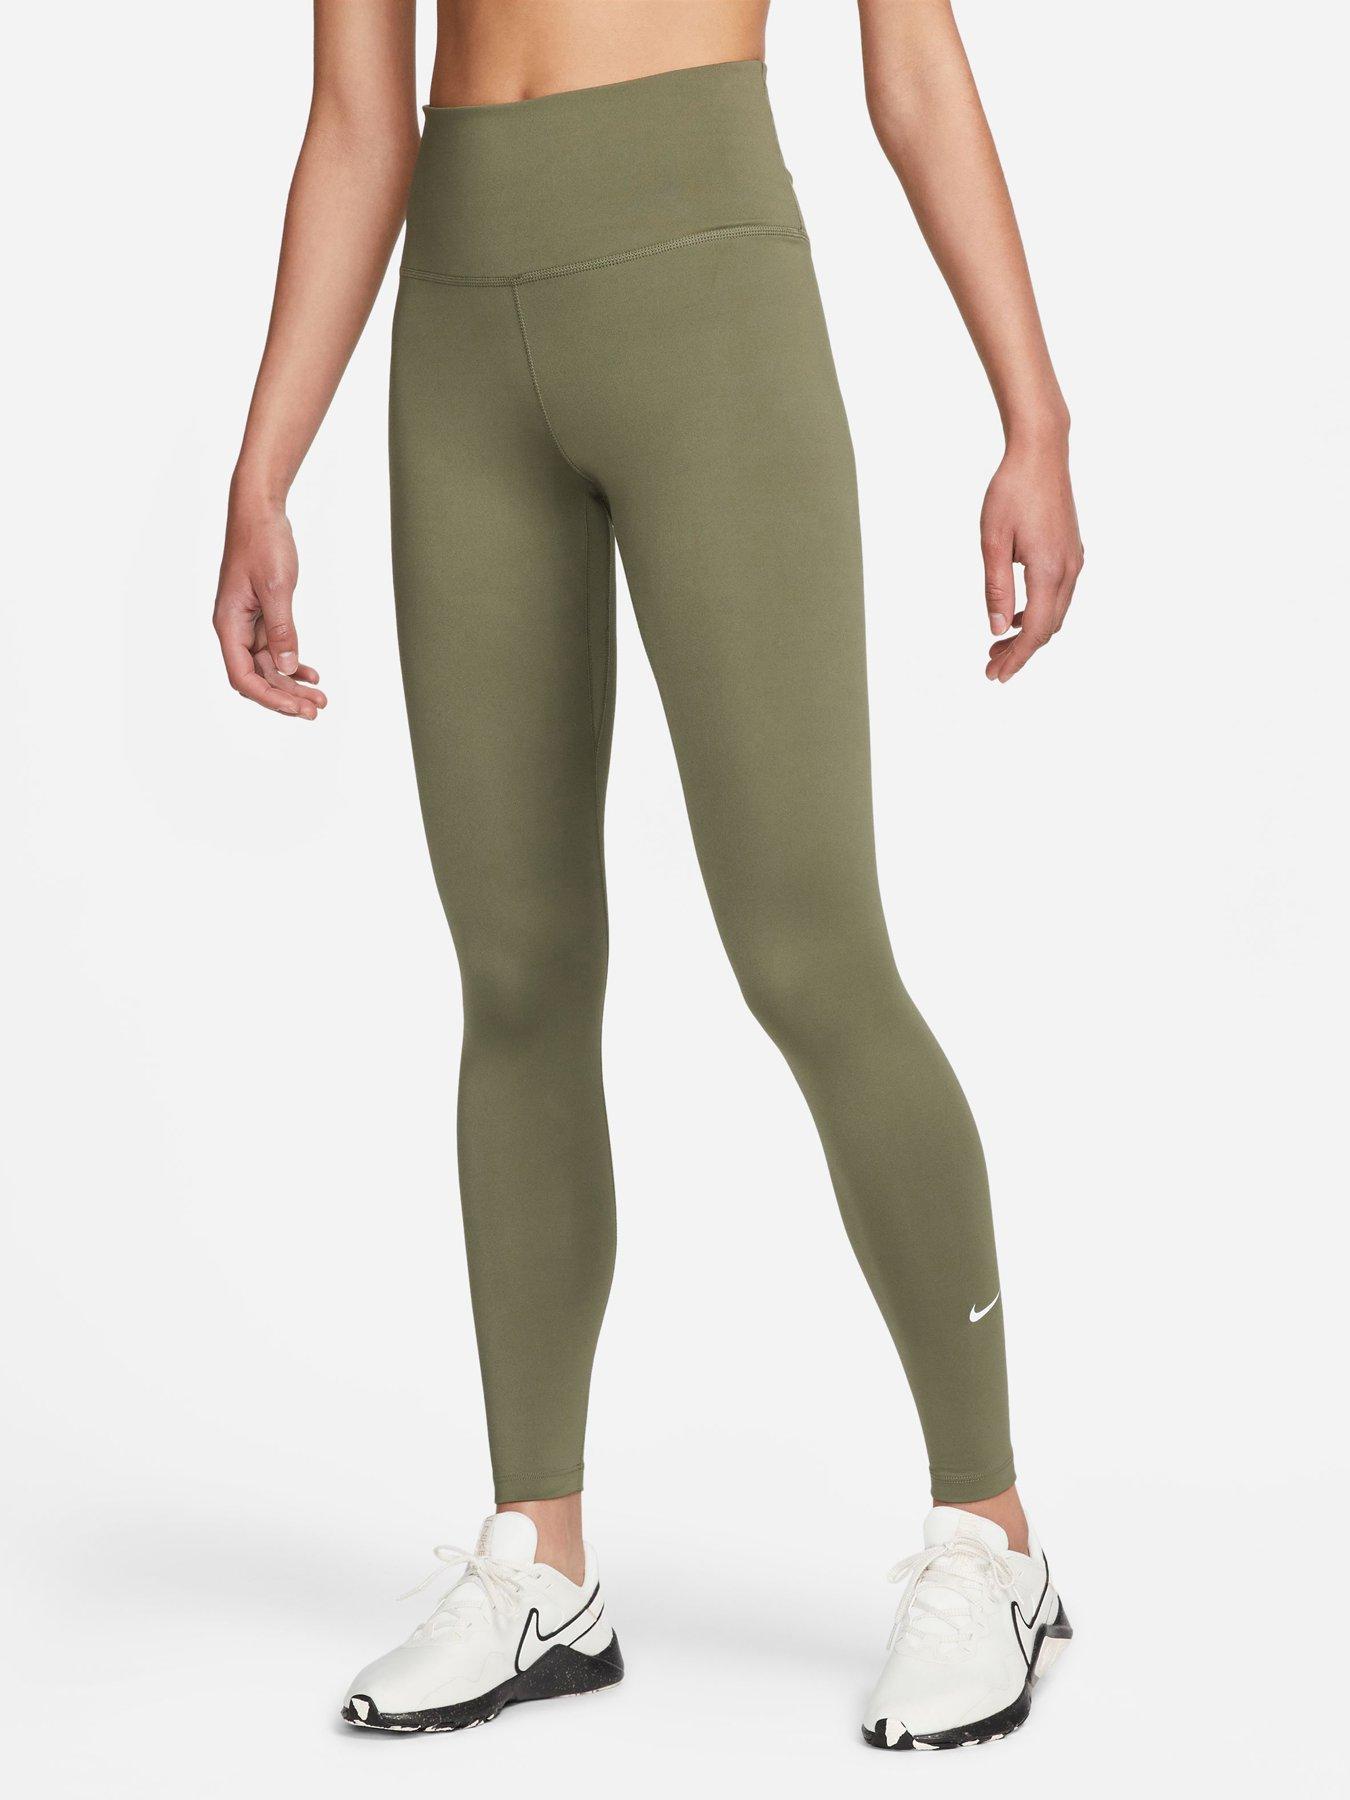 Gymshark Legacy Leggings - Deep Olive Green  Women's leggings, School  fits, Fitness models